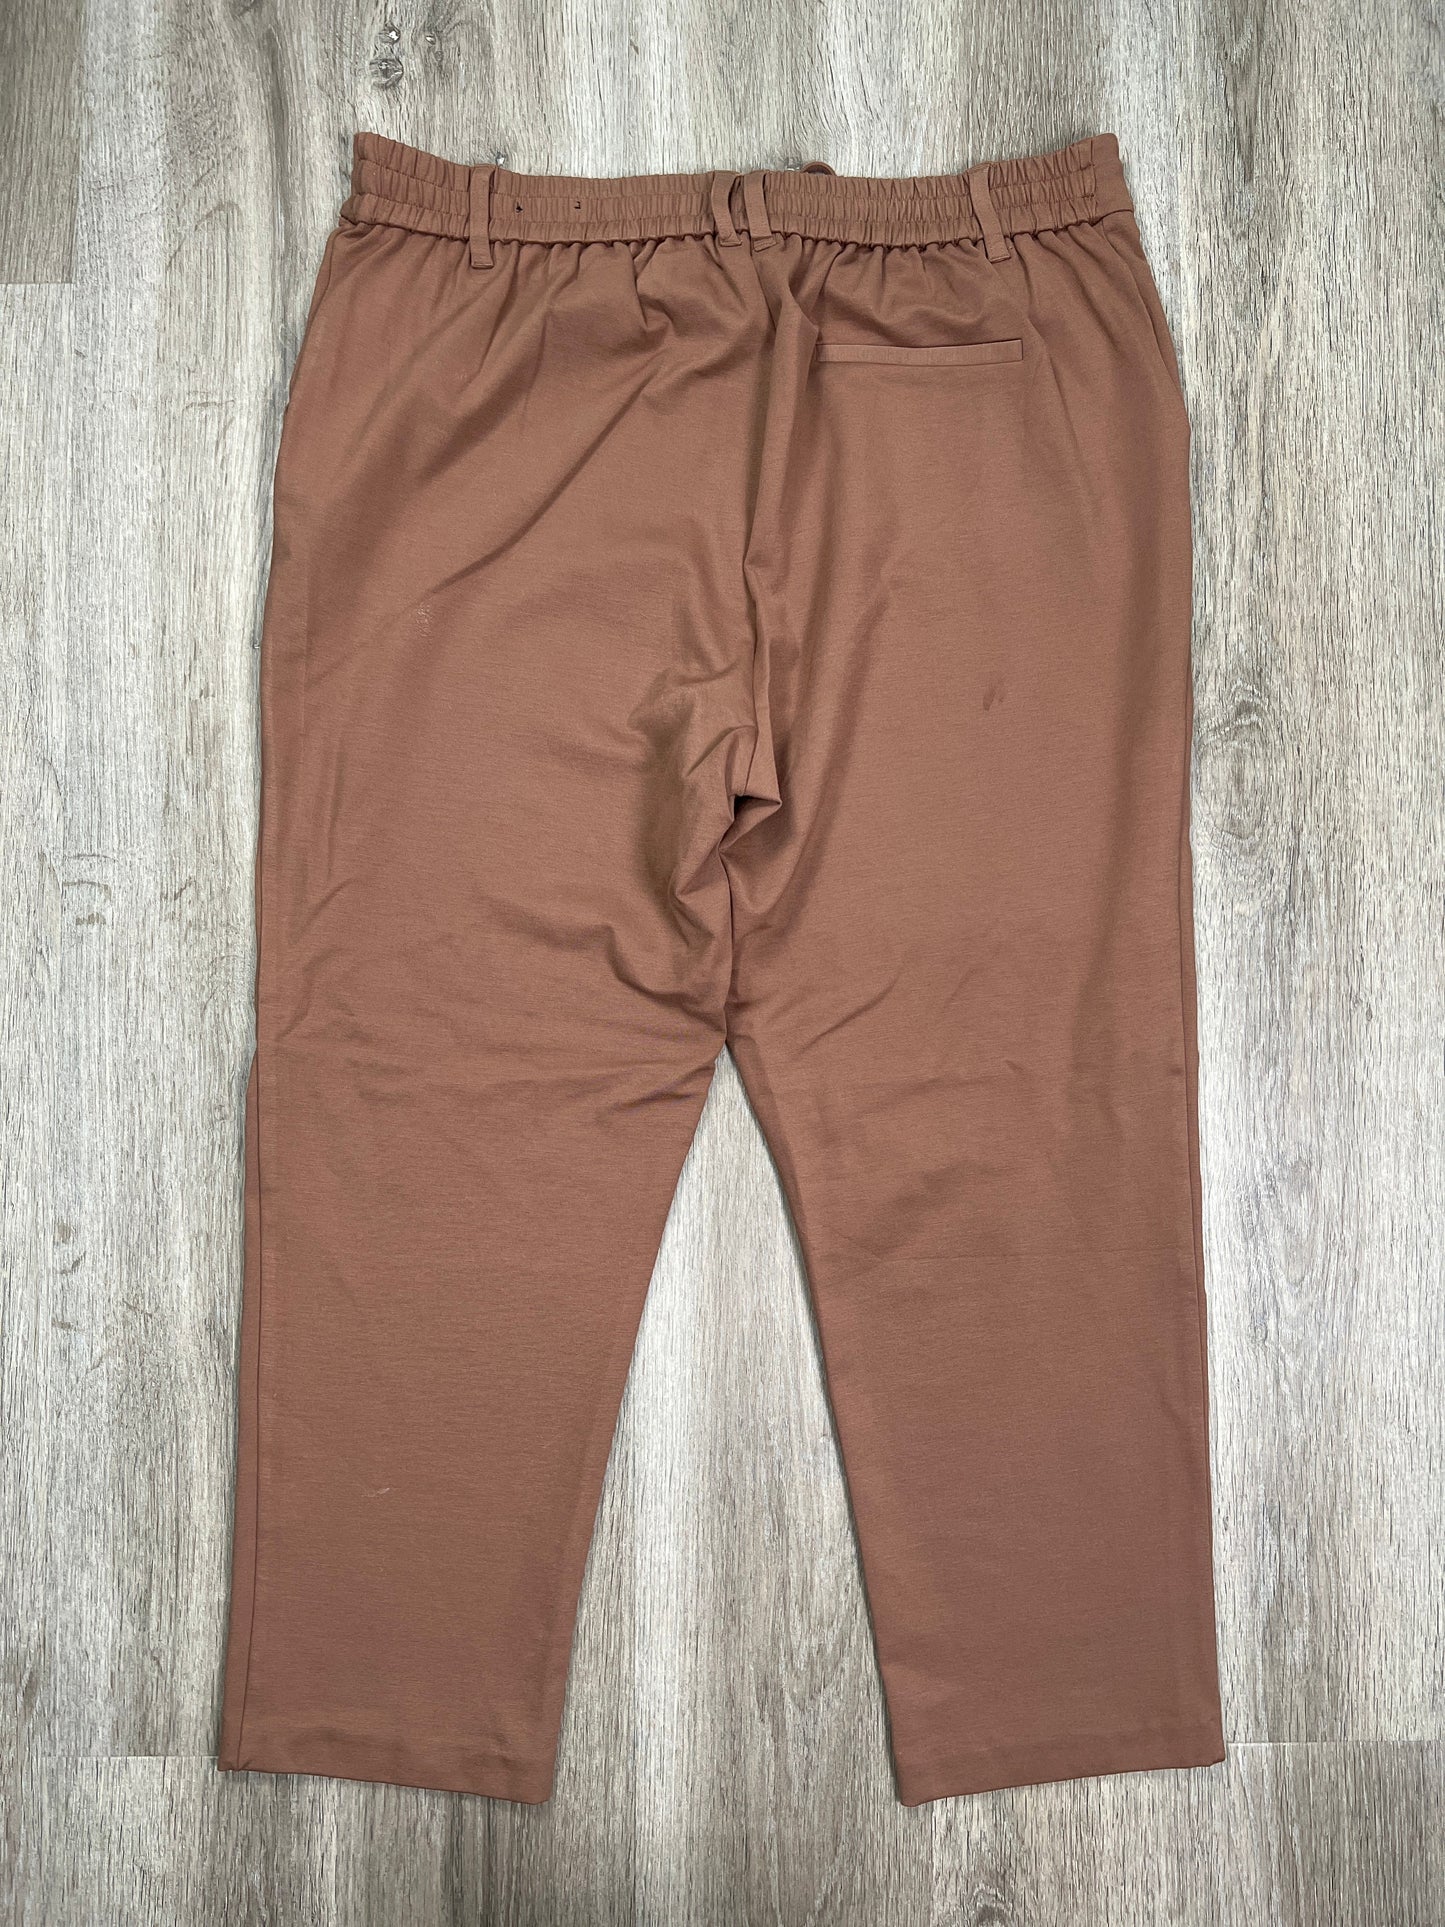 Brown Pants Cropped Jones New York, Size 2x